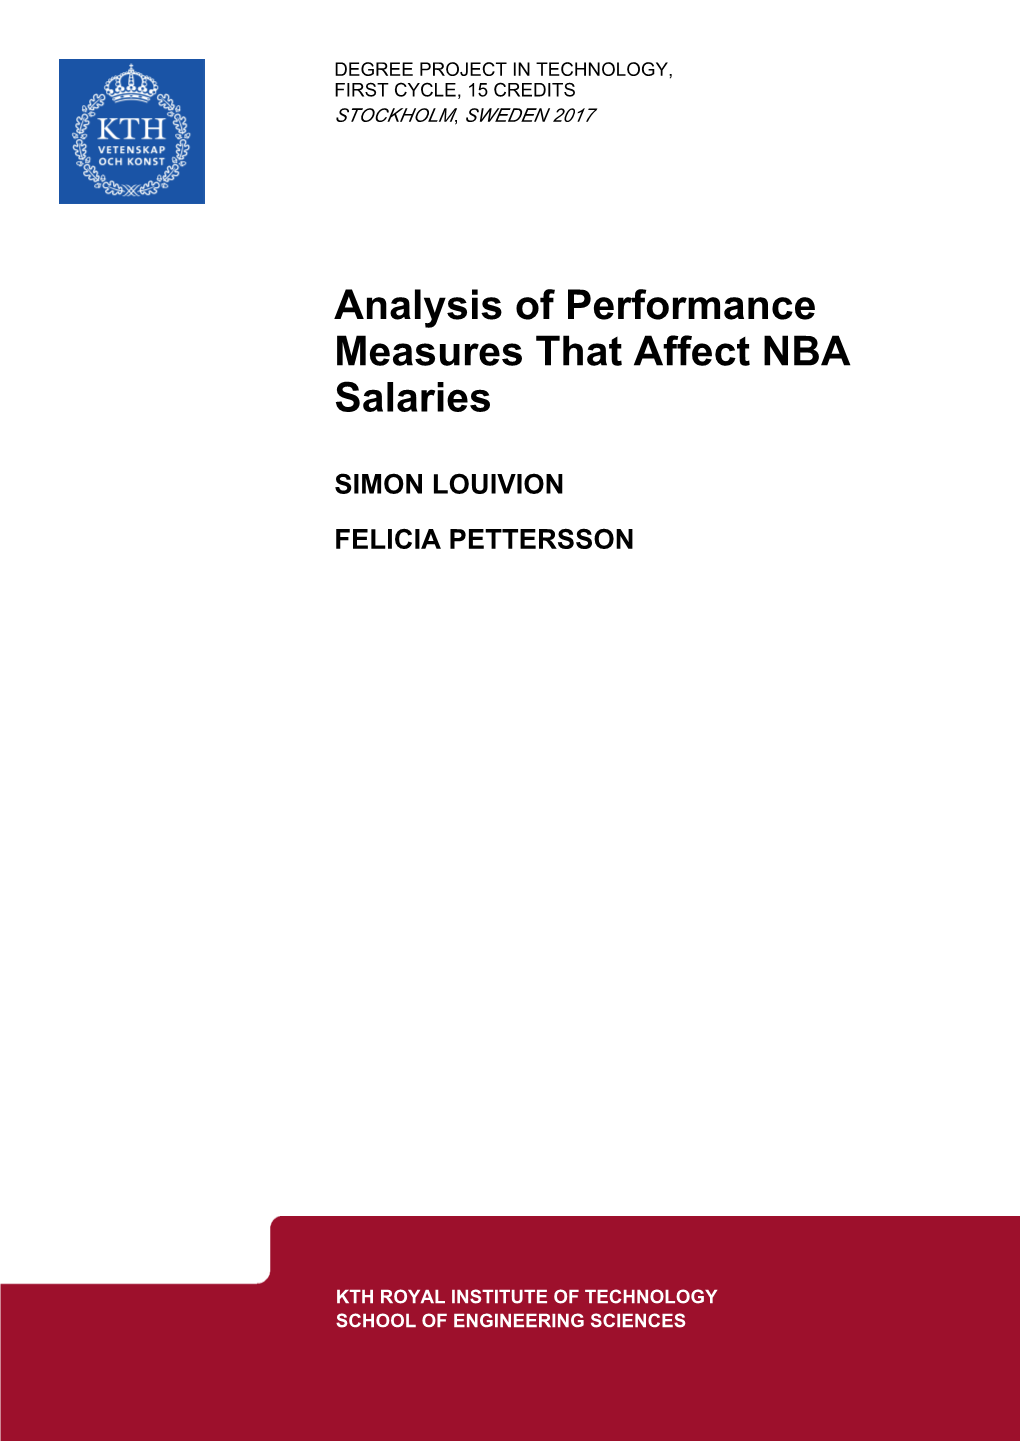 Analysis of Performance Measures That Affect NBA Salaries